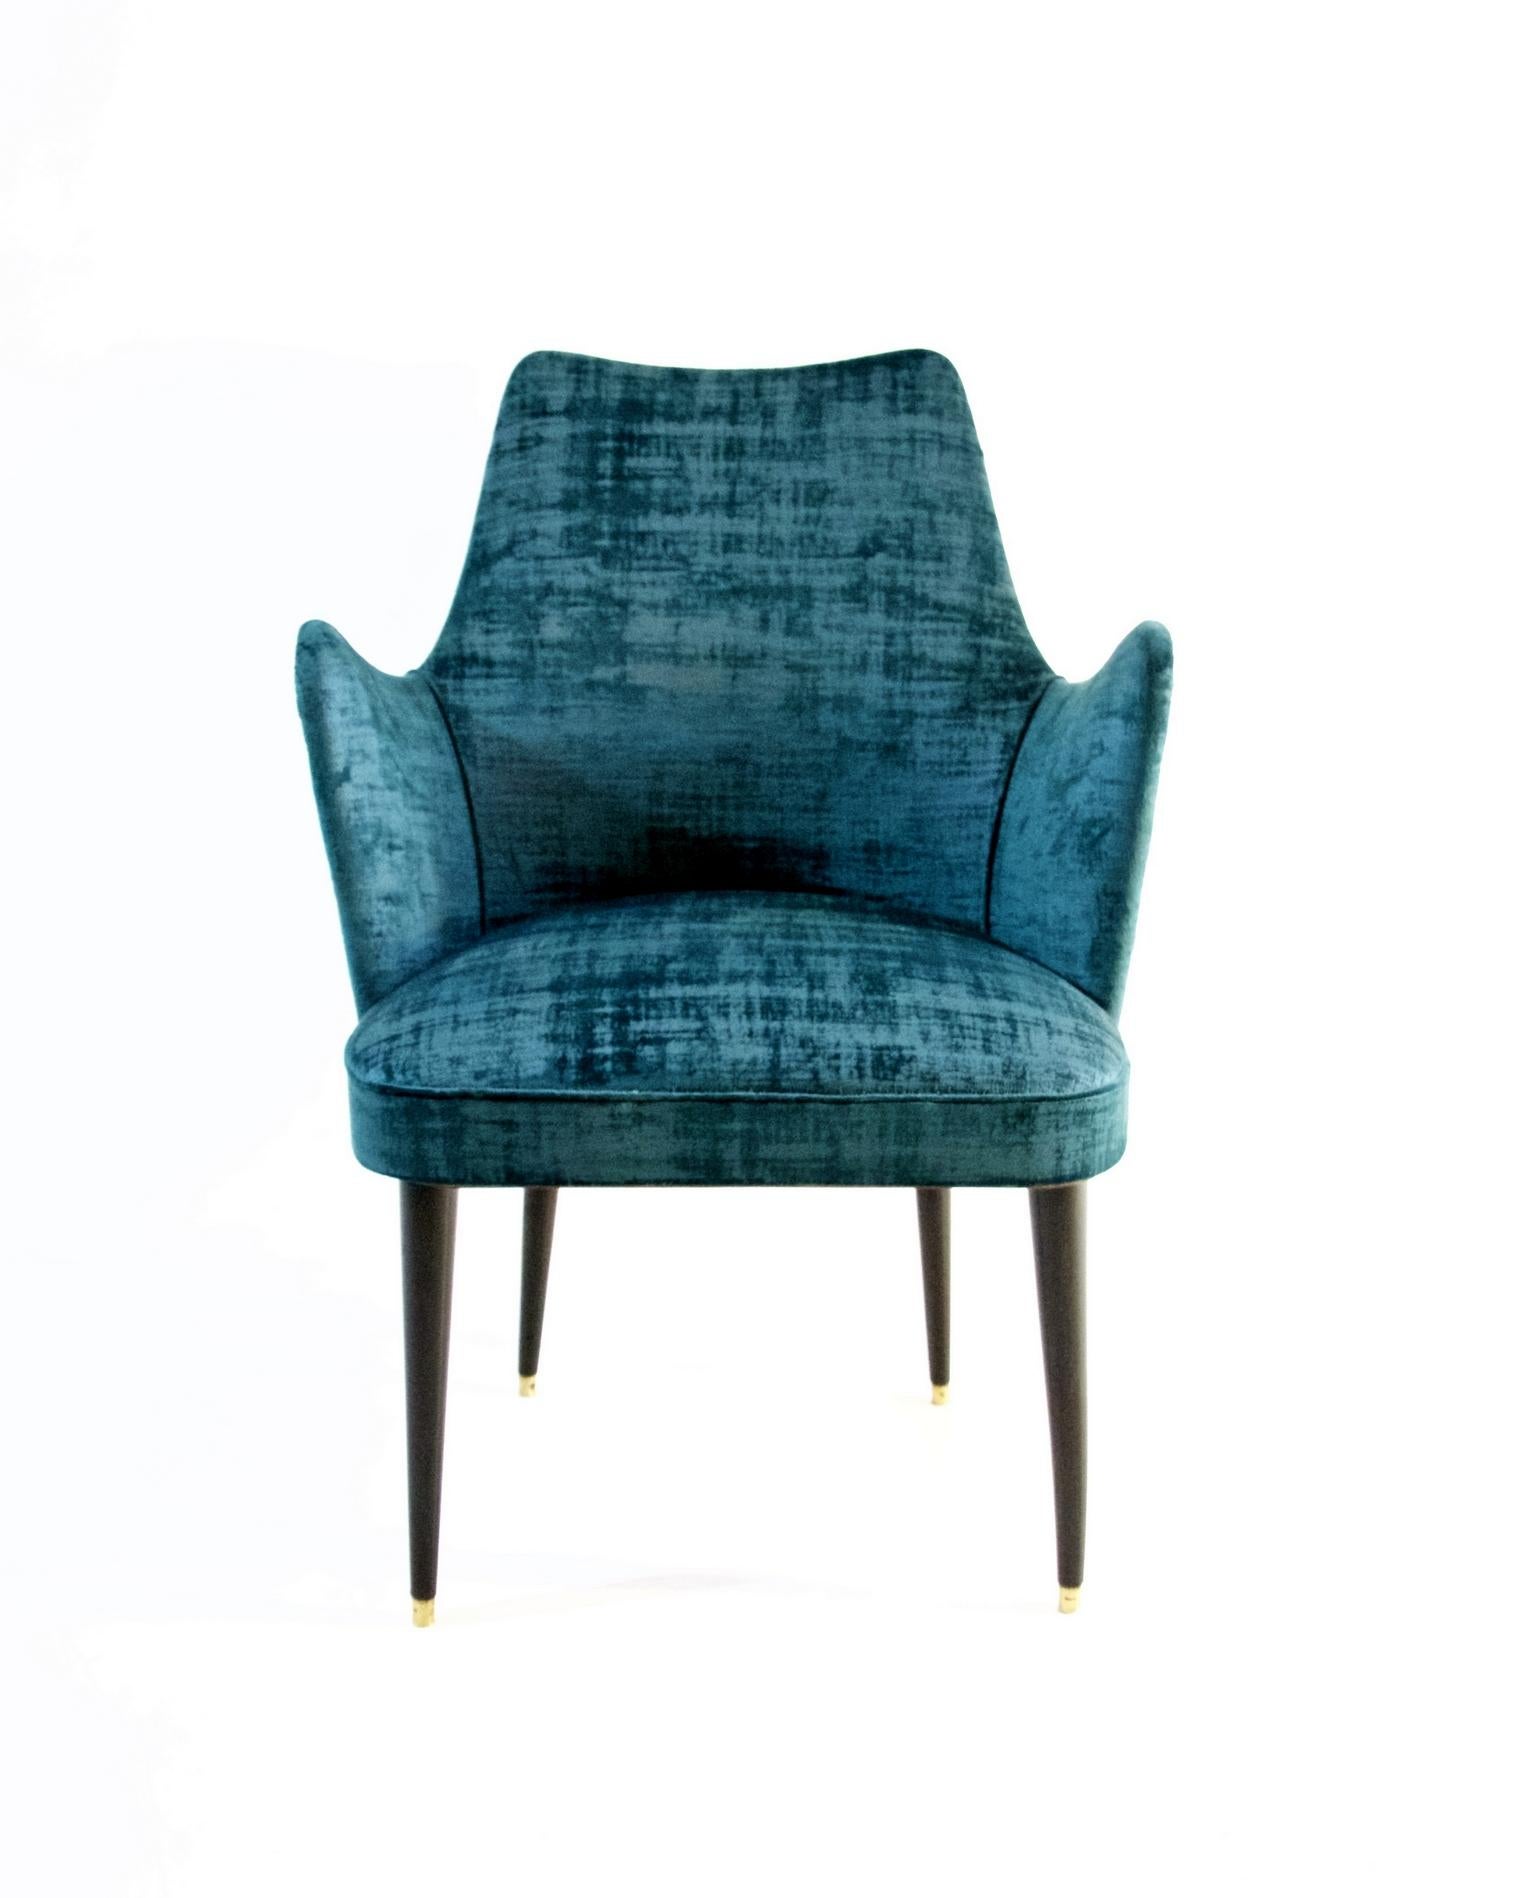 Midcentury Teal Velvet Chairs by Osvaldo Borsani, Italy In Excellent Condition In Albano Laziale, Rome/Lazio